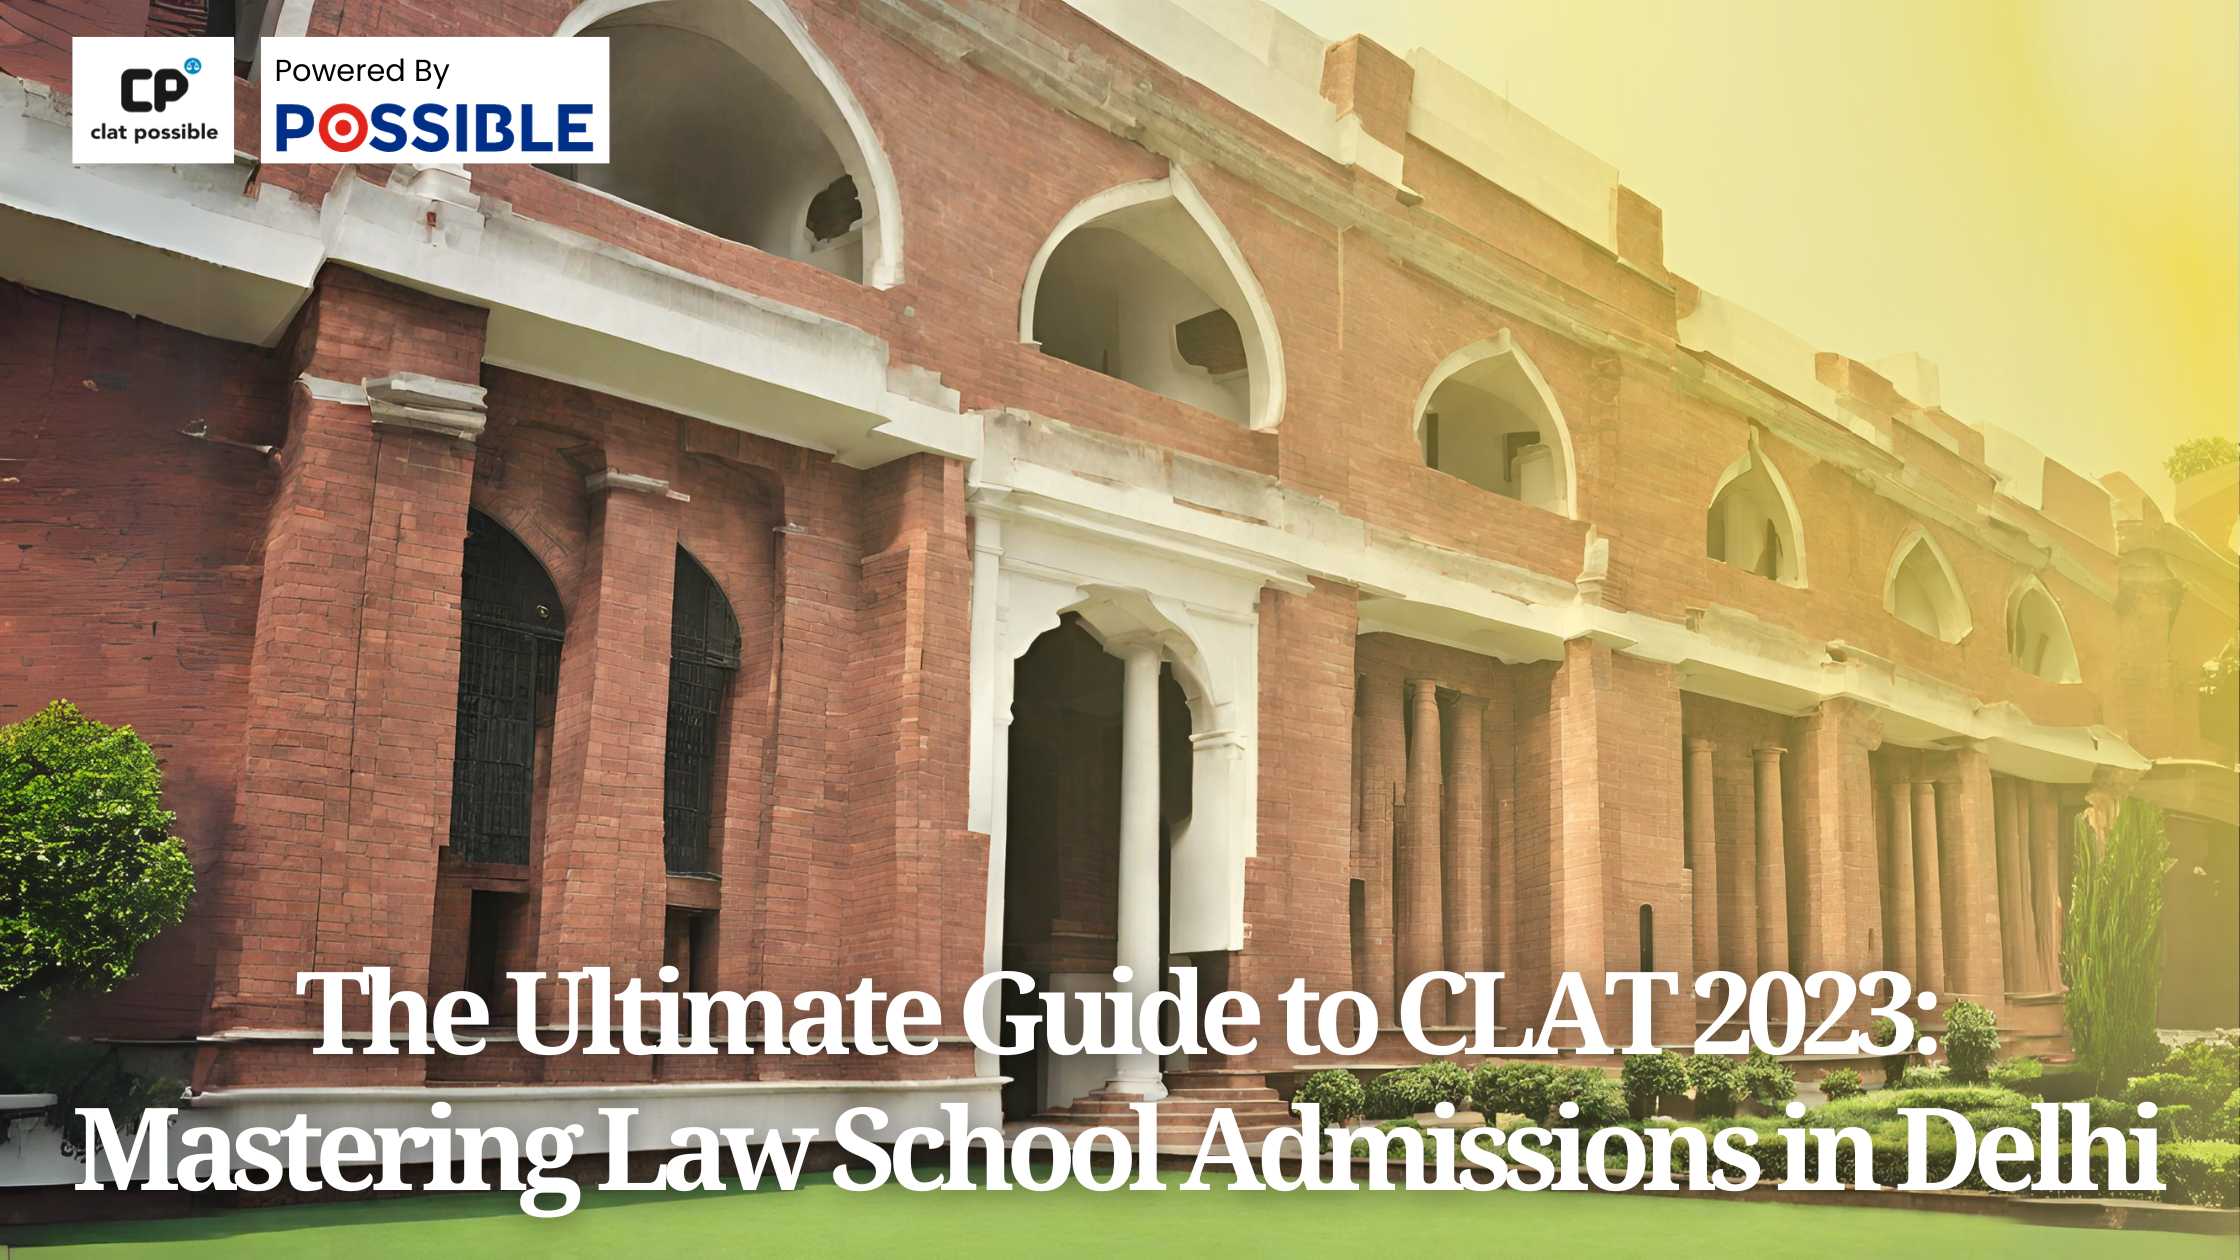 Law School Admissions in Delhi